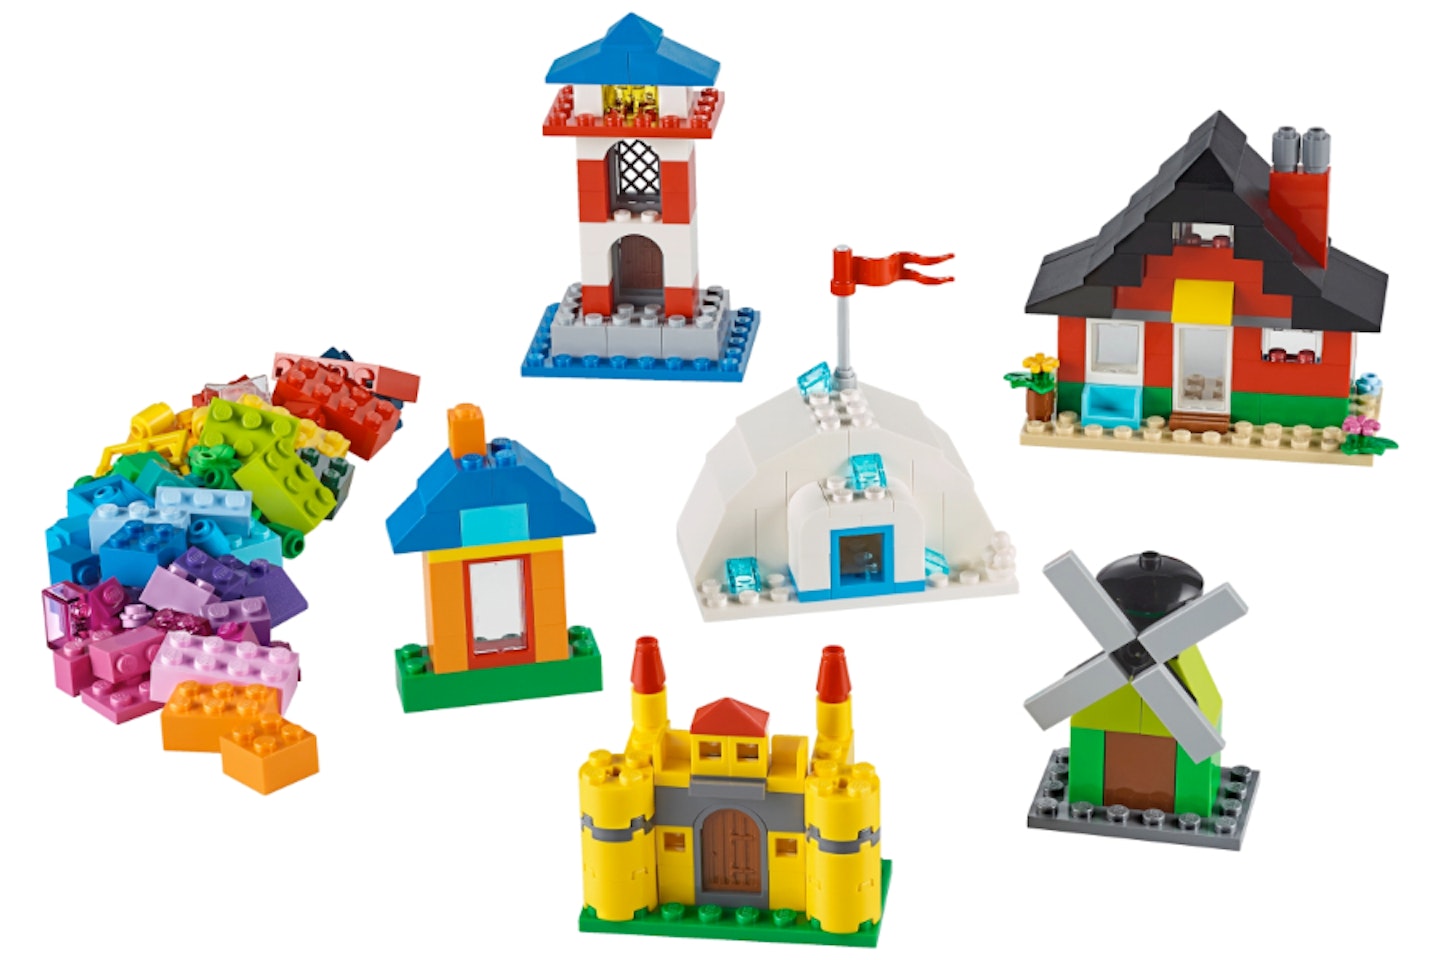 LEGO Classic Bricks and Houses